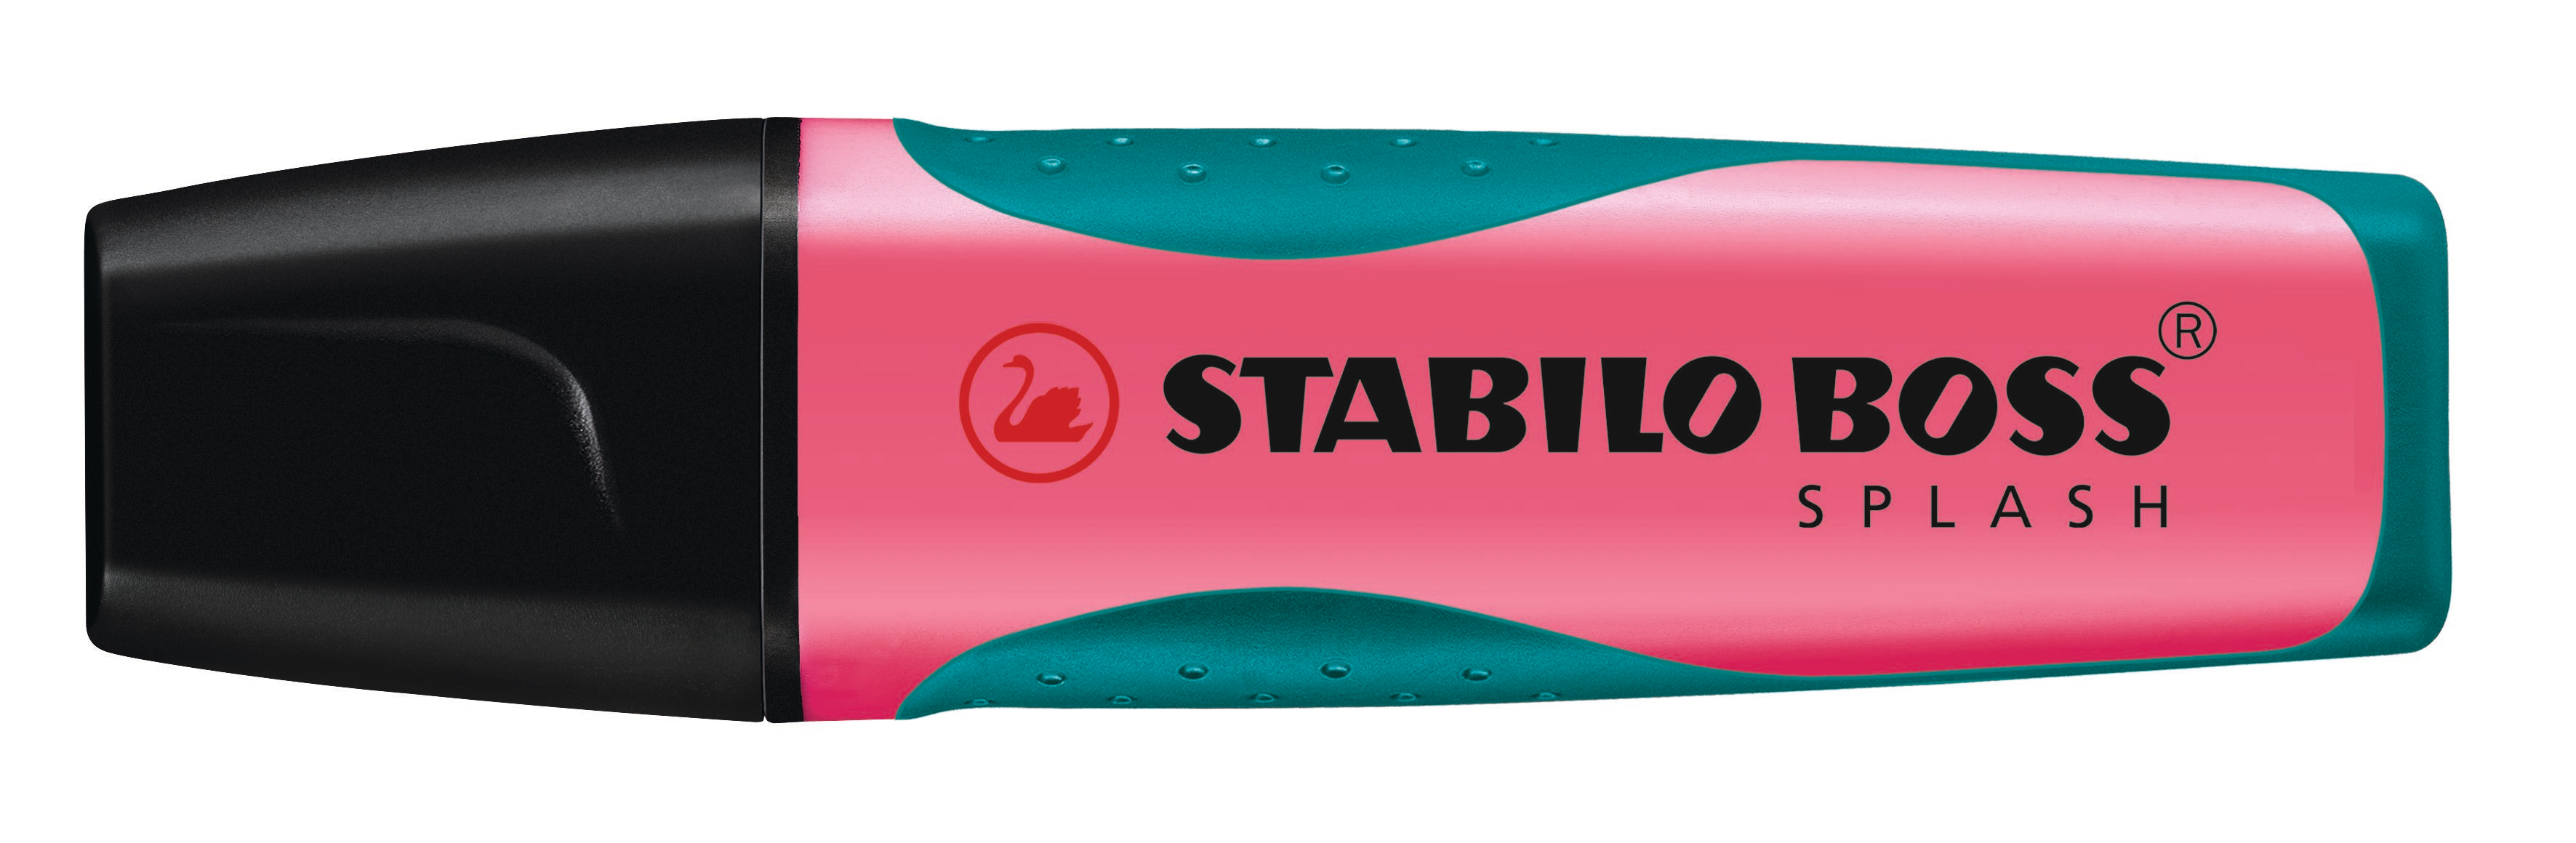 STABILO BOSS SPLASH 75/56 pink pink